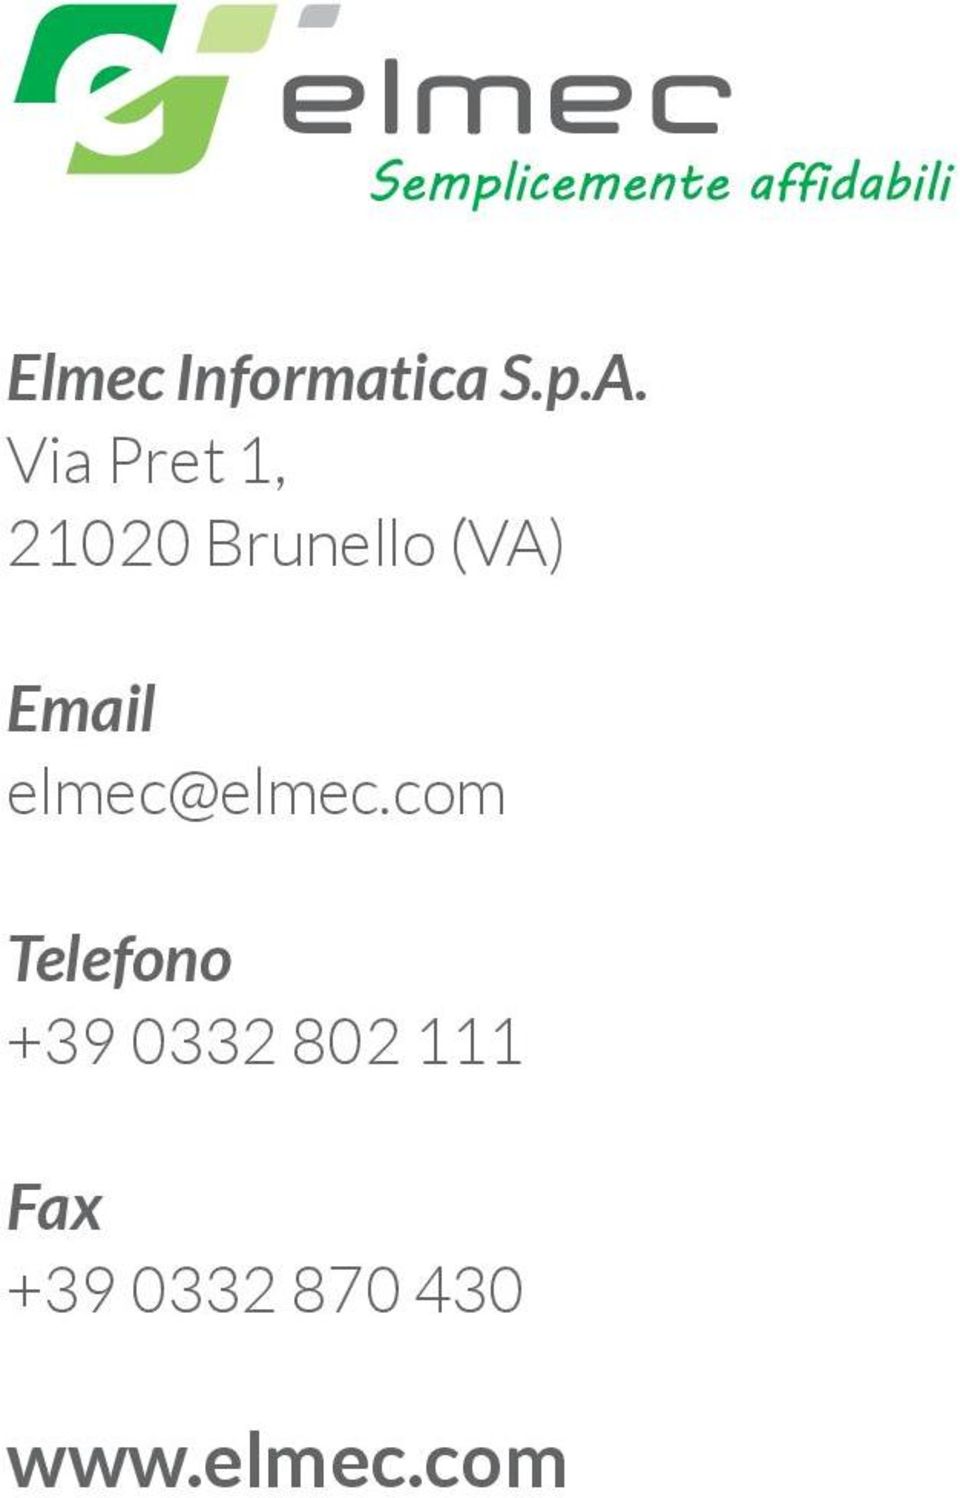 Email elmec@elmec.